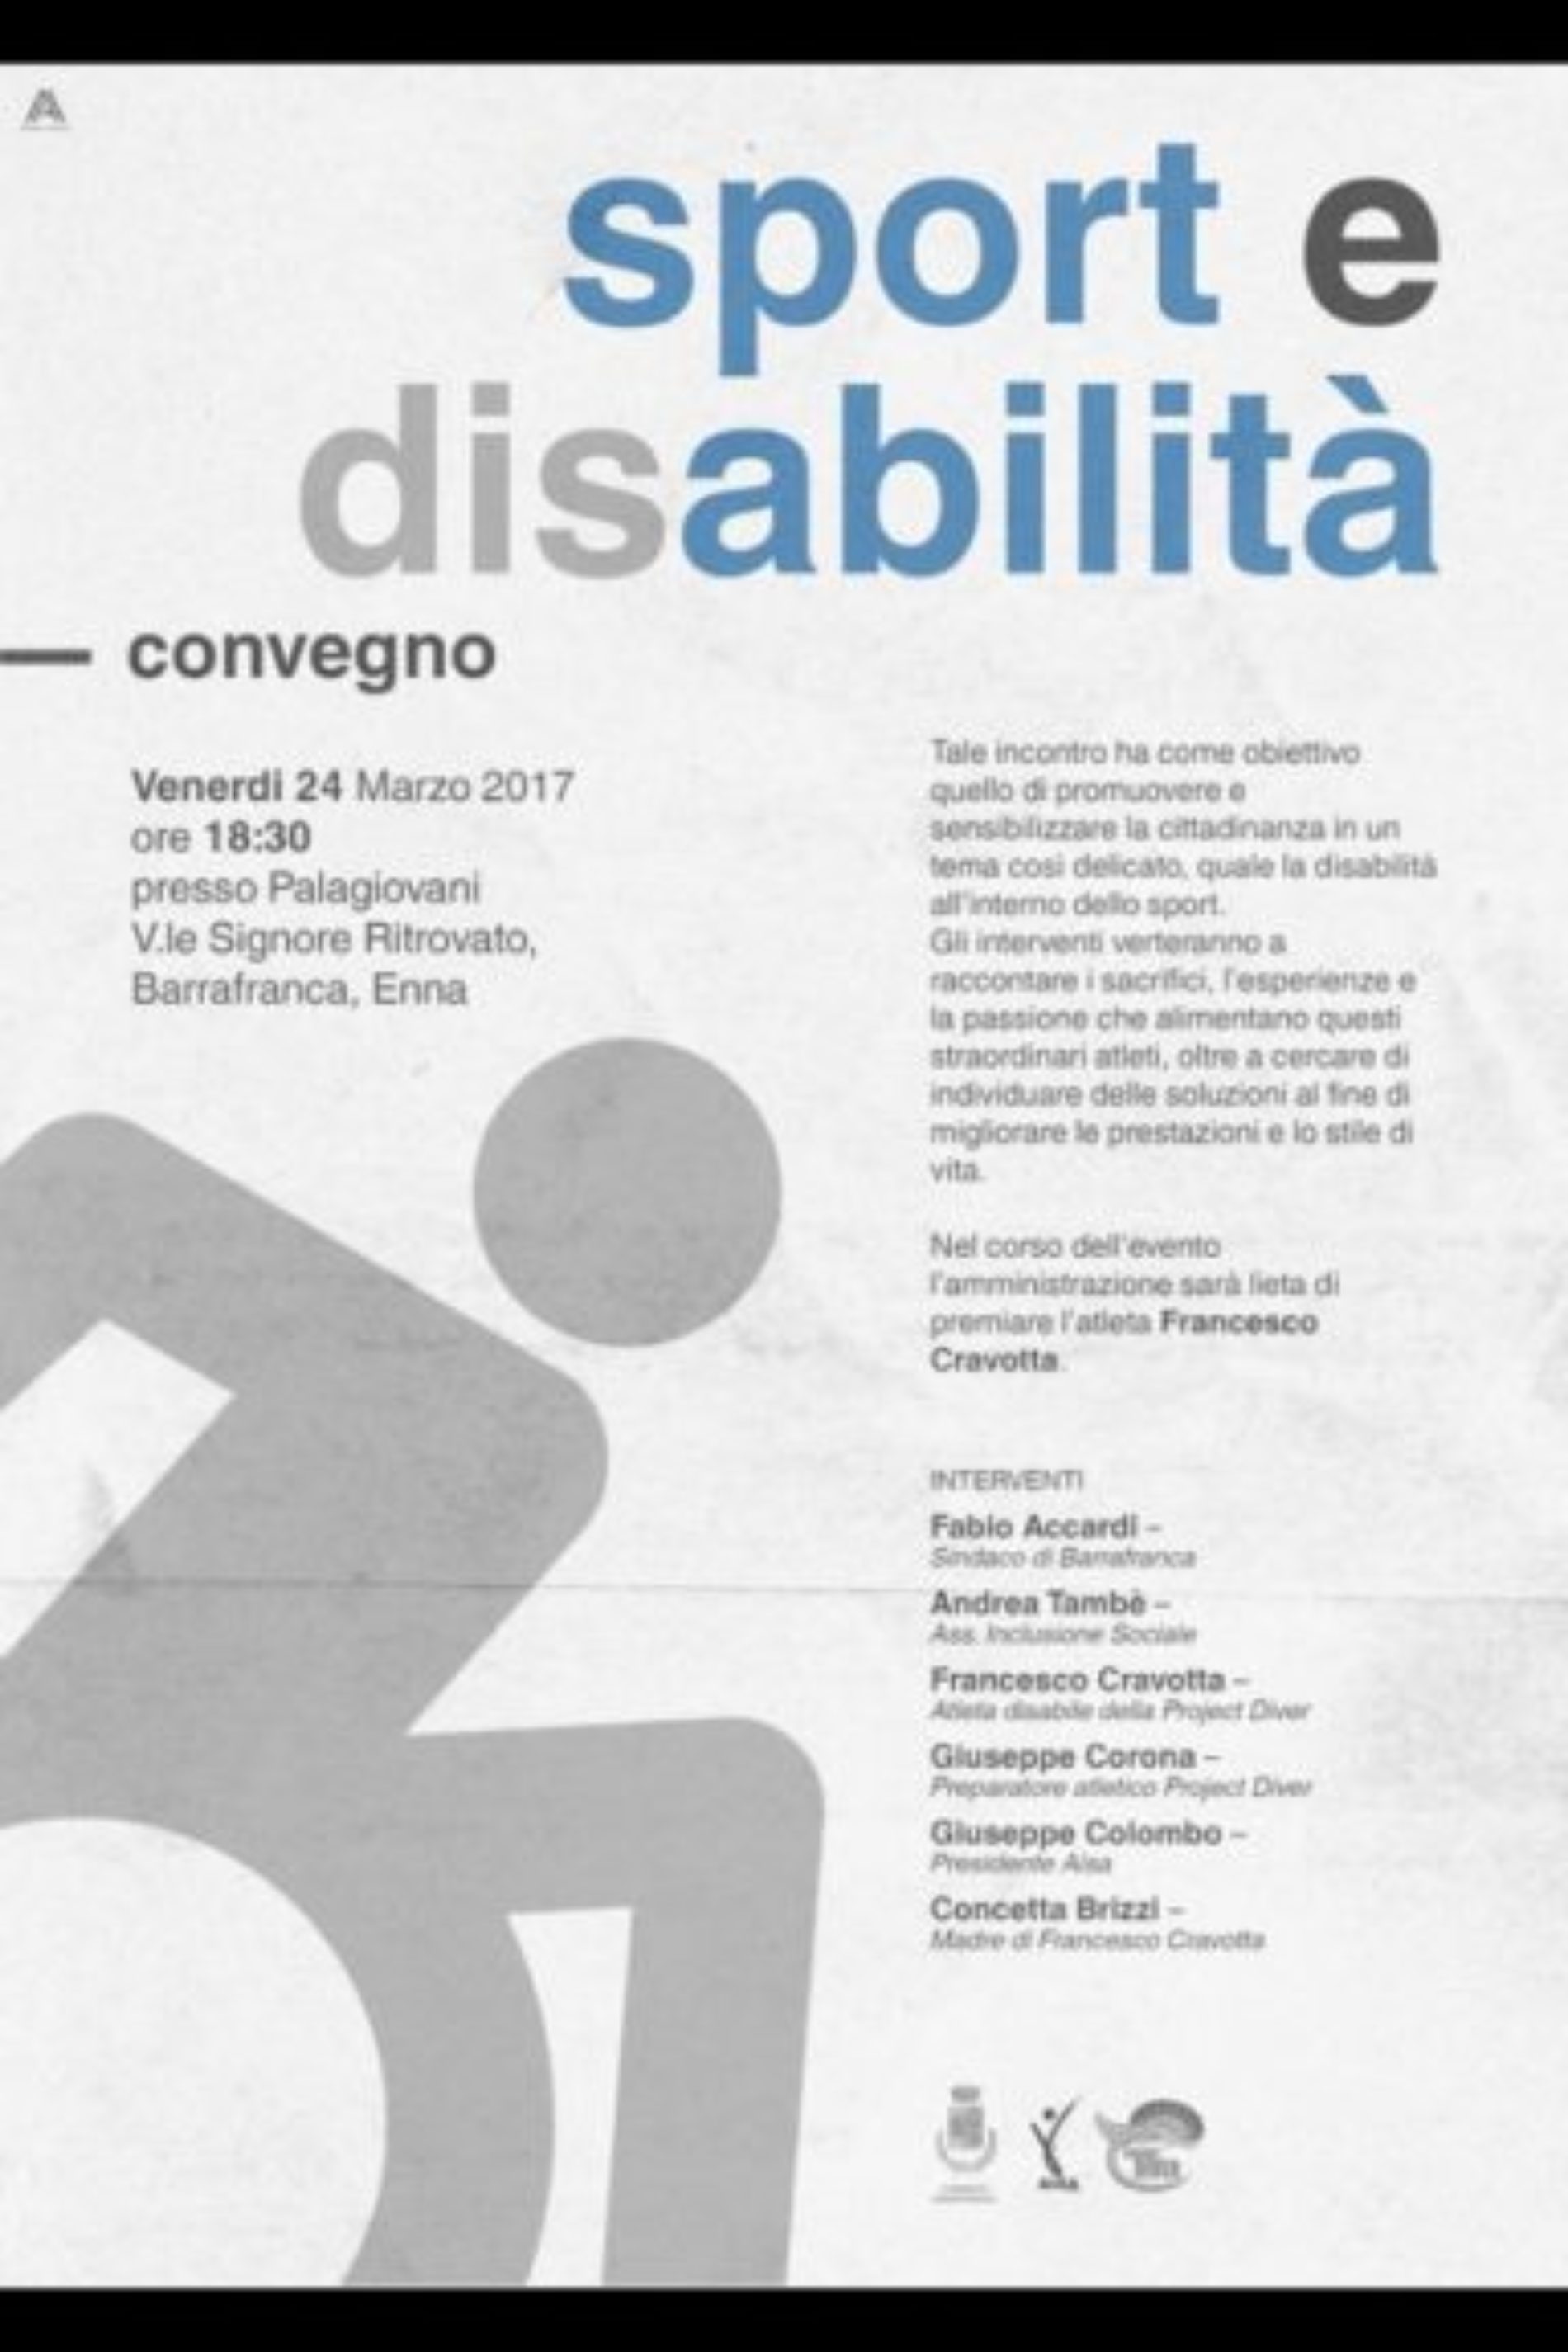 Sport e disabilità: l’amministrazione premierà l’atleta barrese Francesco Cravotta